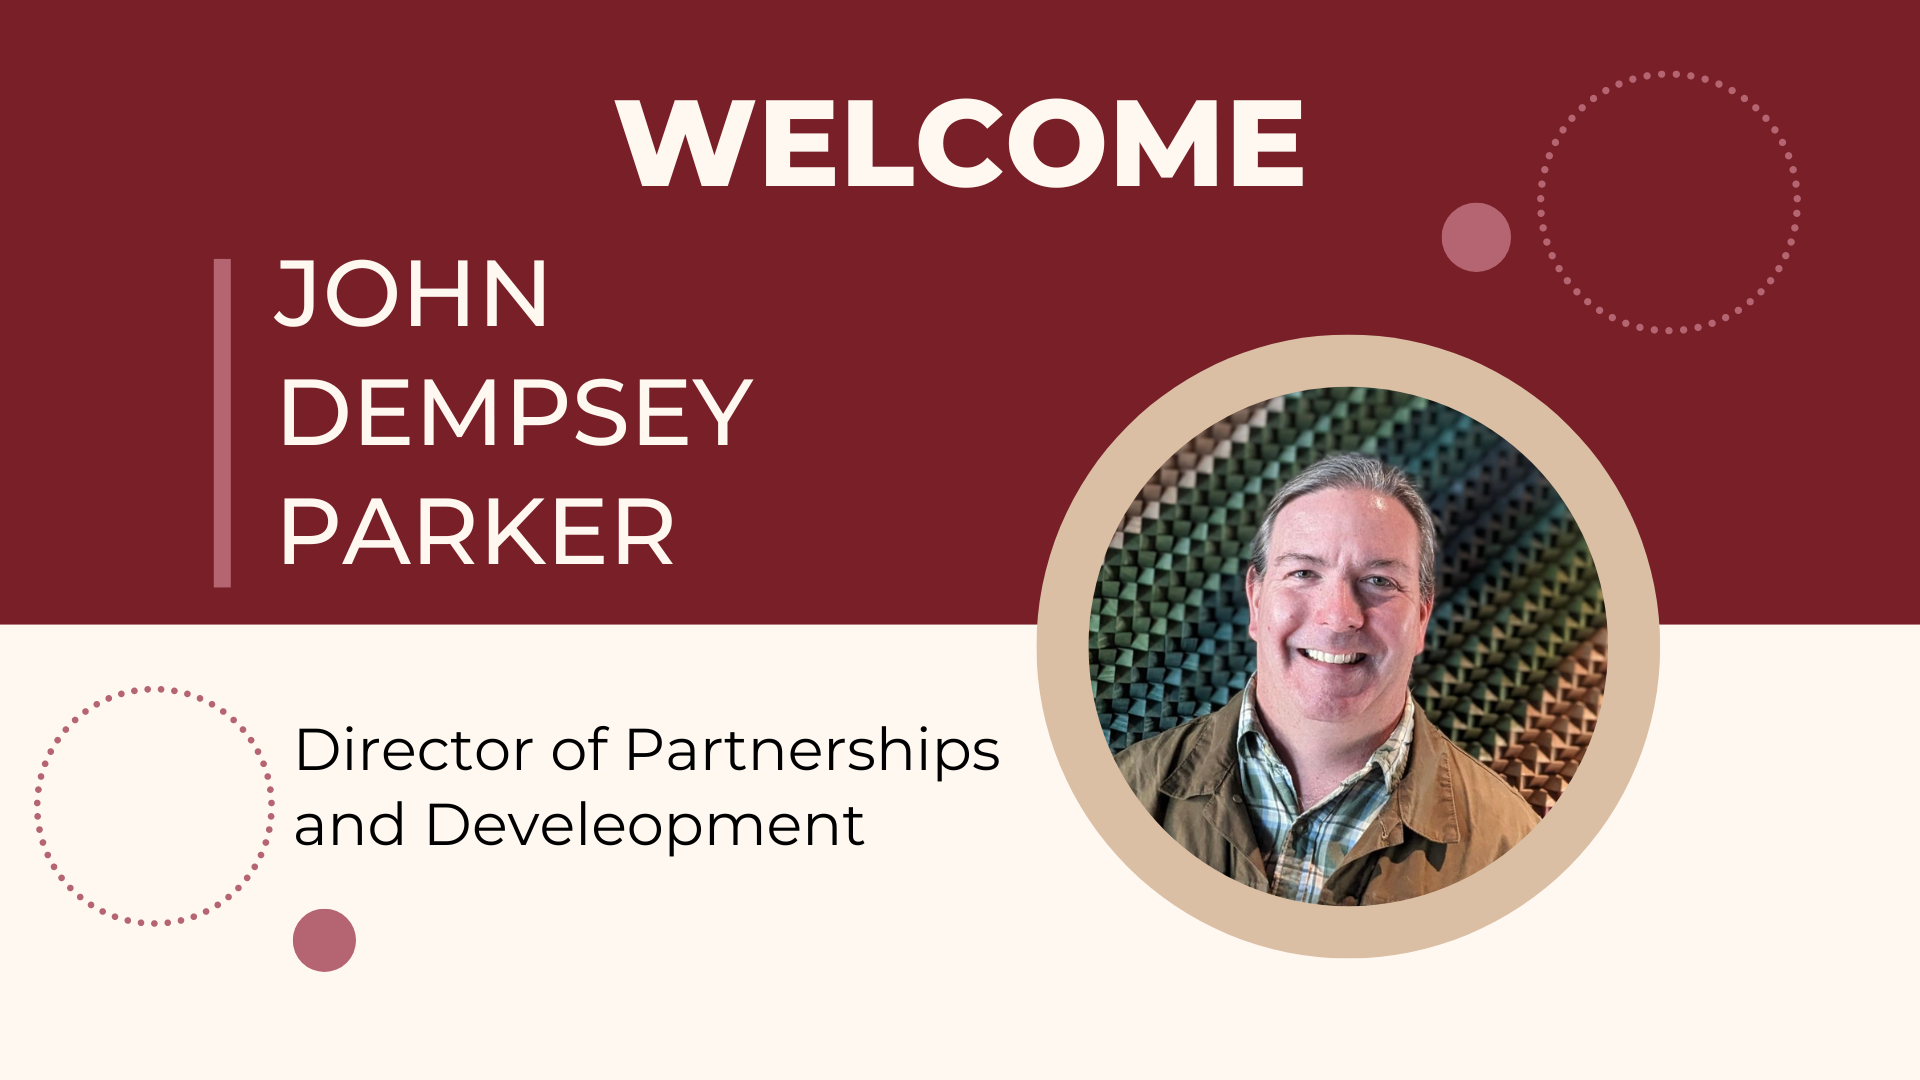 Welcome John Dempsey Parker!